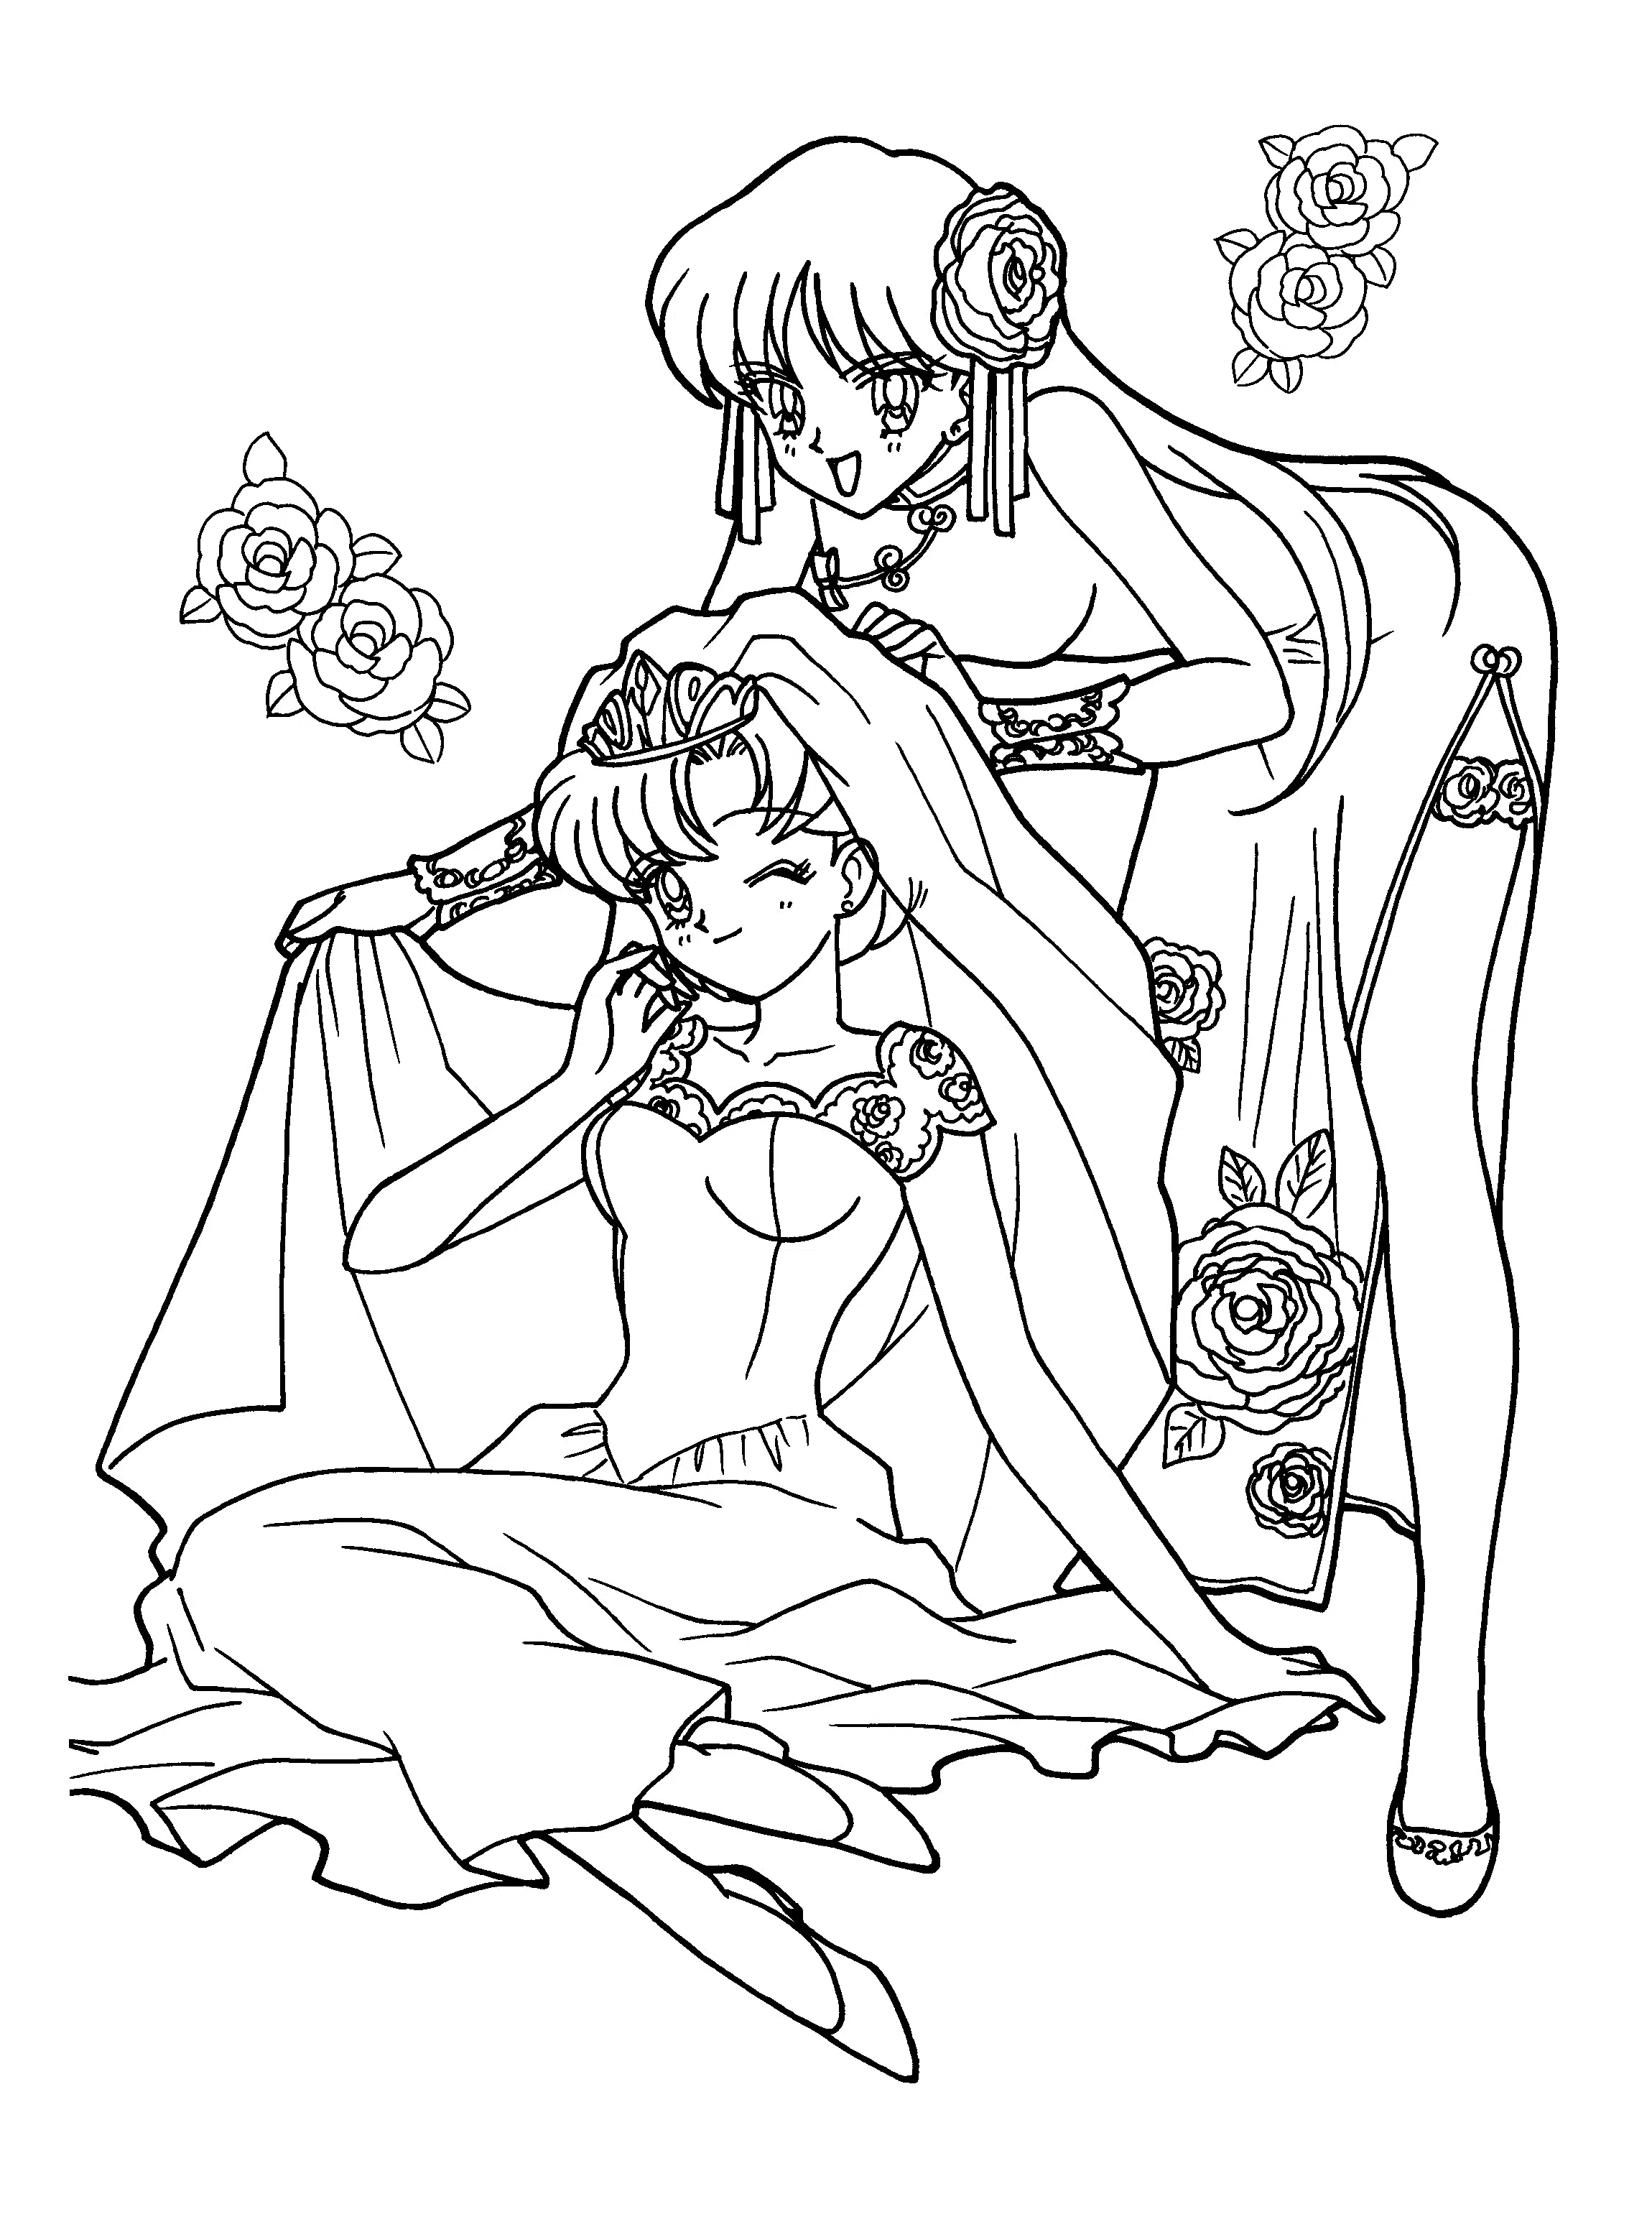 Sailor Moon 19